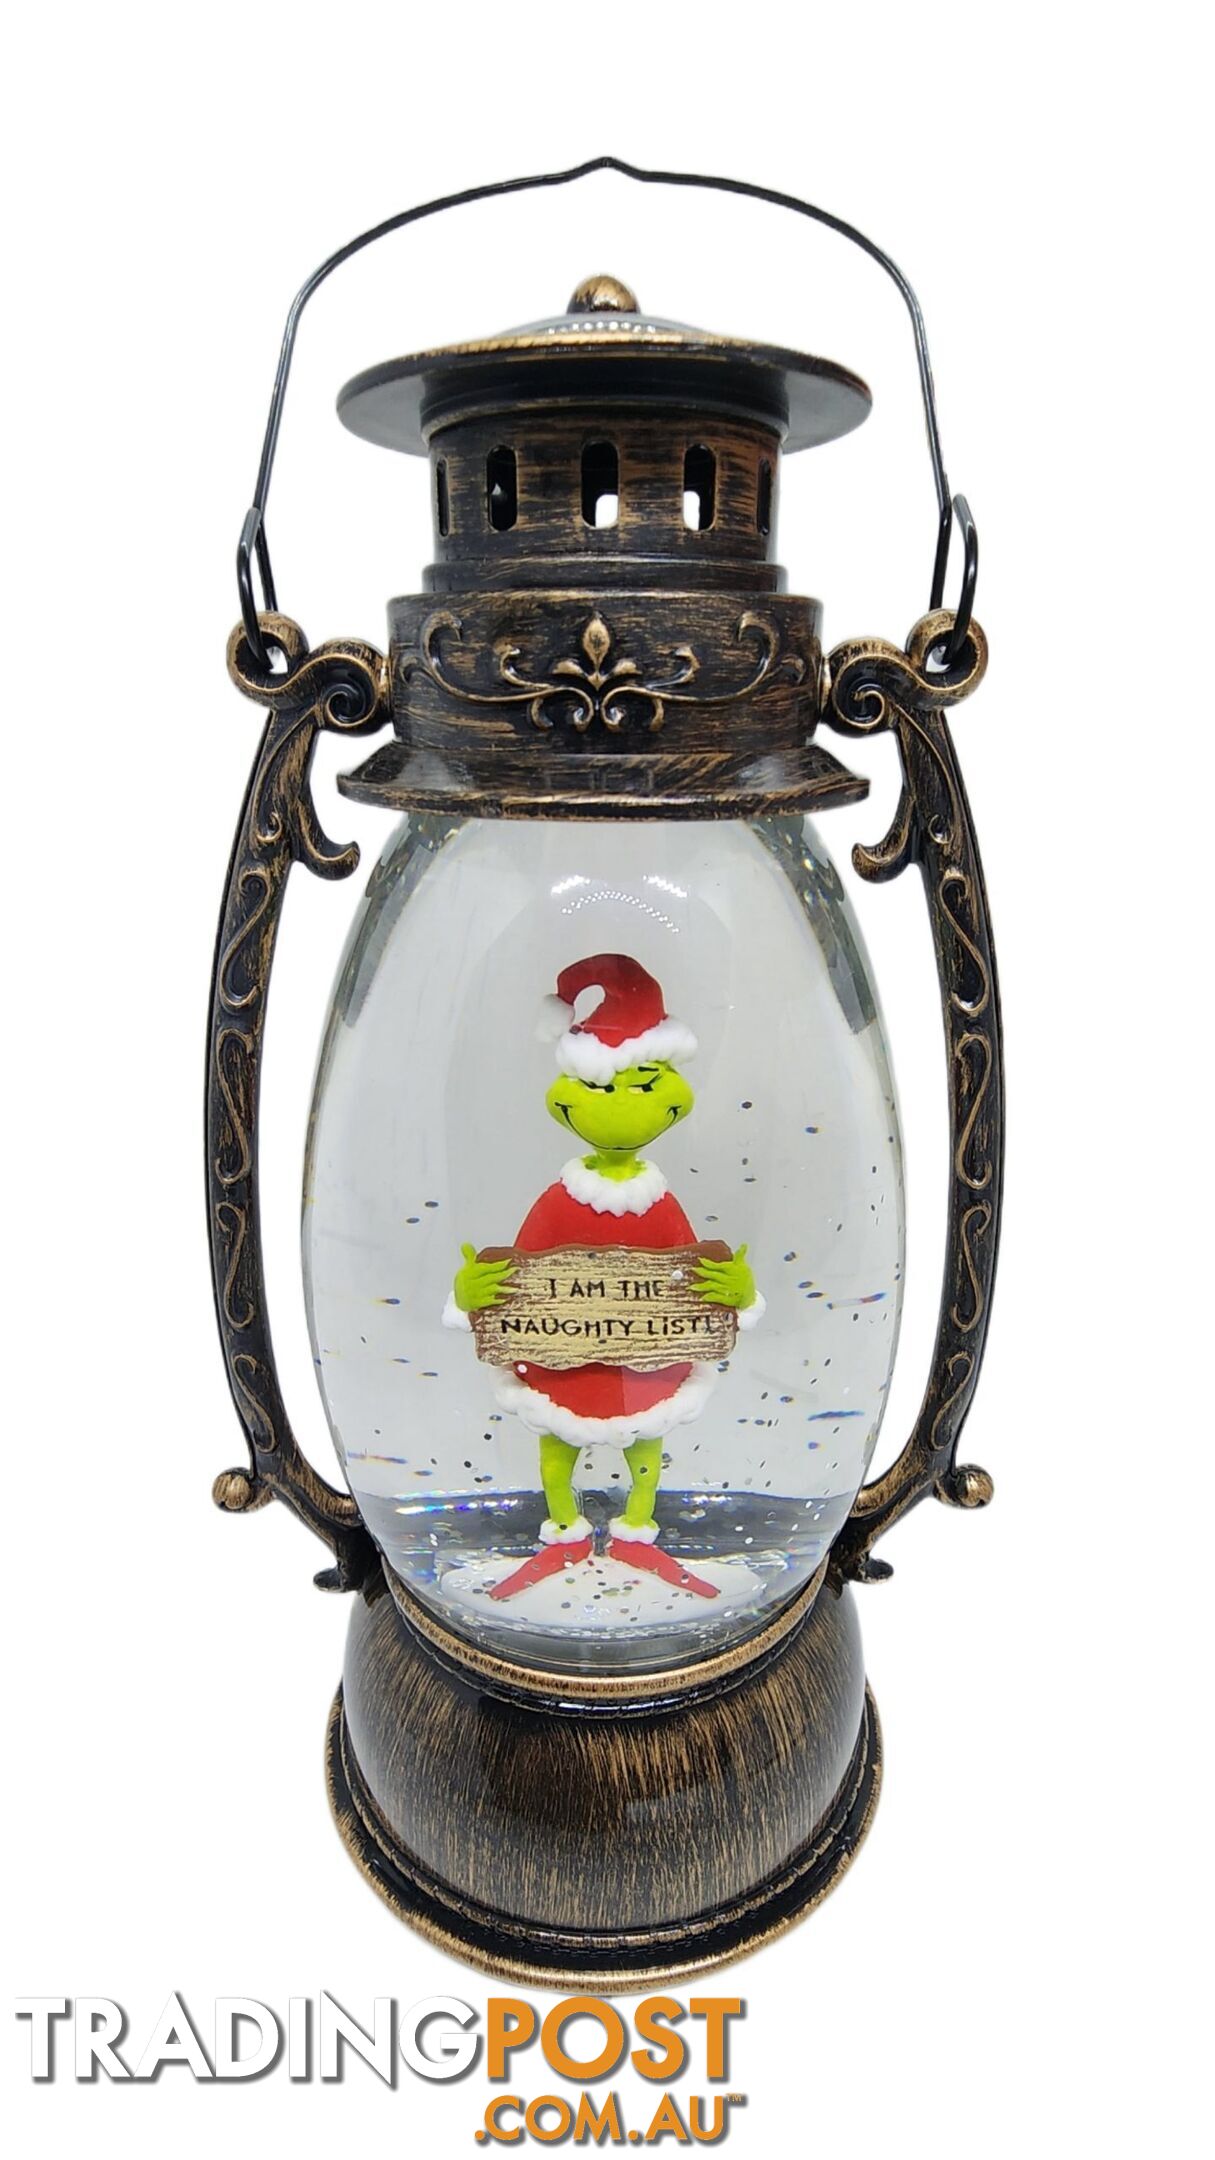 Cotton Candy - Xmas Dr. Seuss Grinch â€˜ I Am The Naughty List â€™ Brass Lantern - Cczxgr52 - 9353468016832